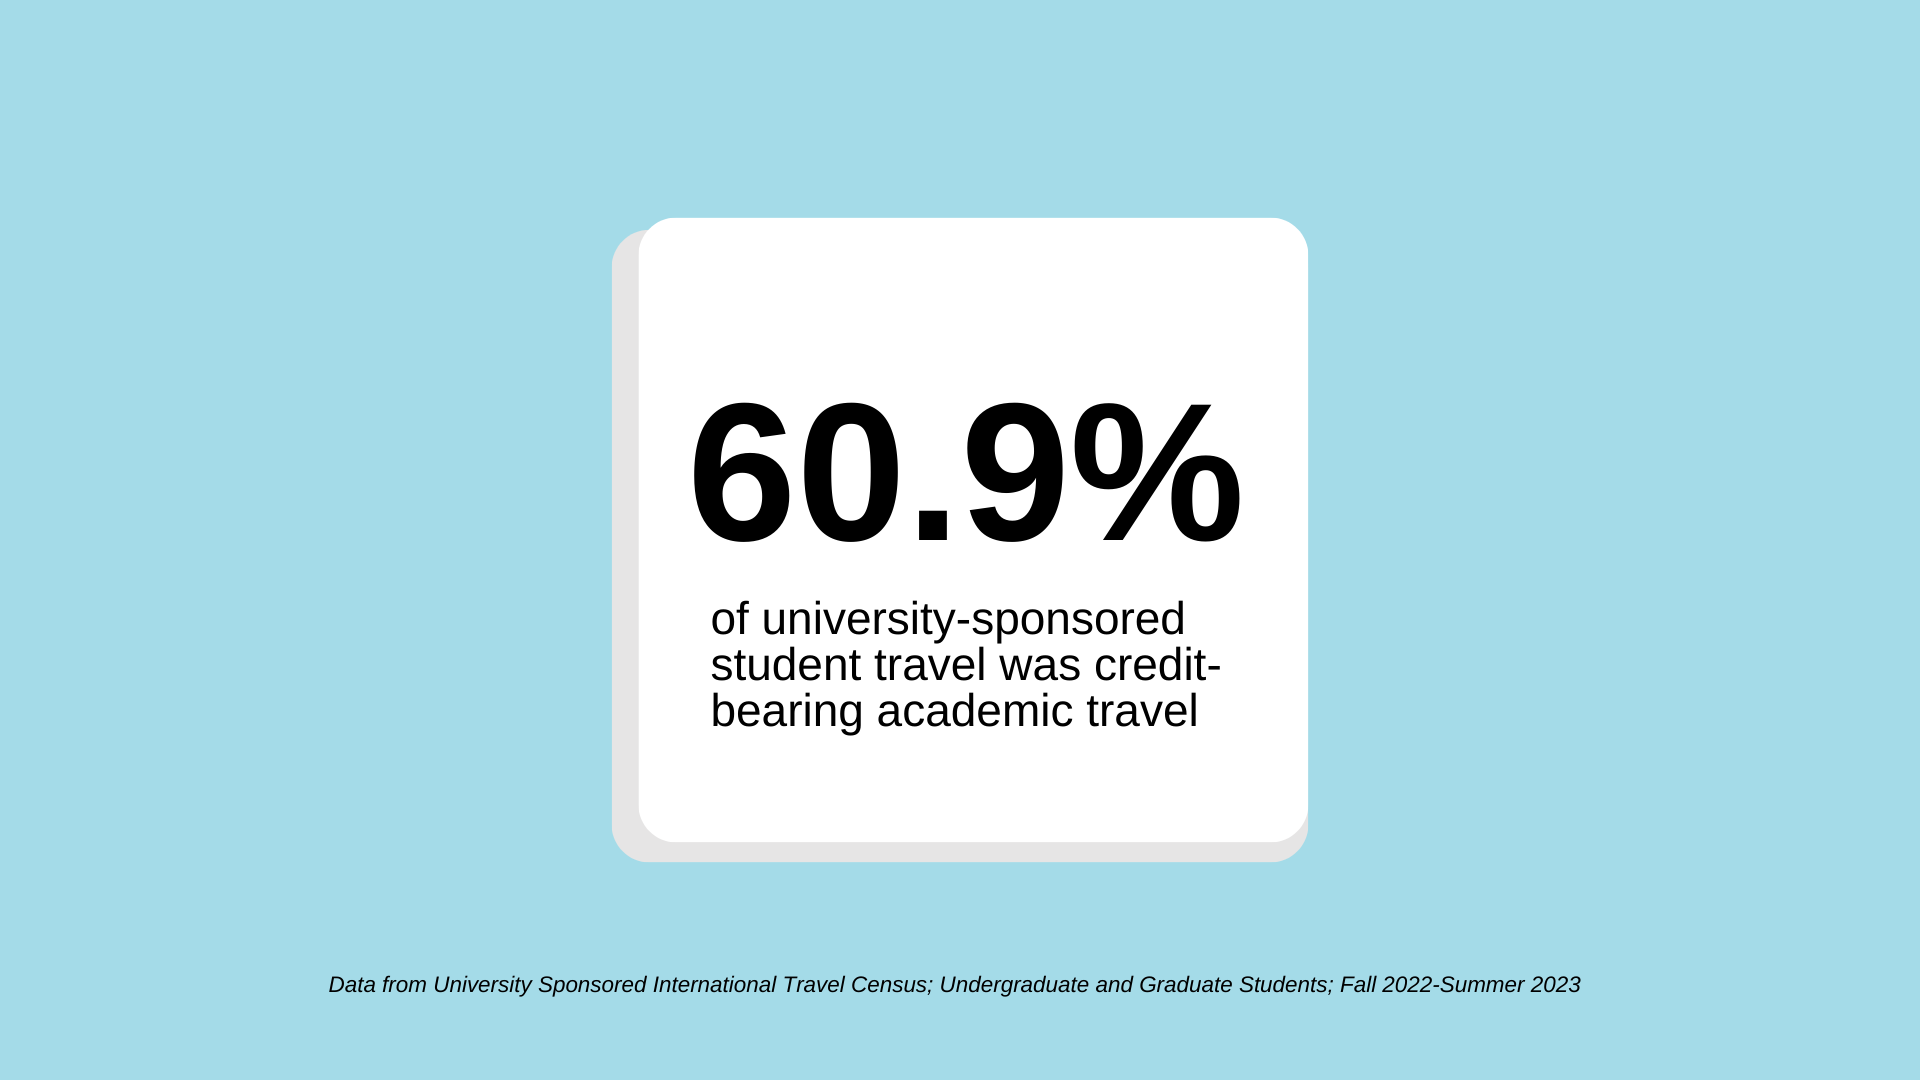 60.9% of university-sponsored student travel was credit-bearing academic travel; Data from University Sponsored International Travel Census; Undergraduate and Graduate Students; Fall 2022-Summer 2023